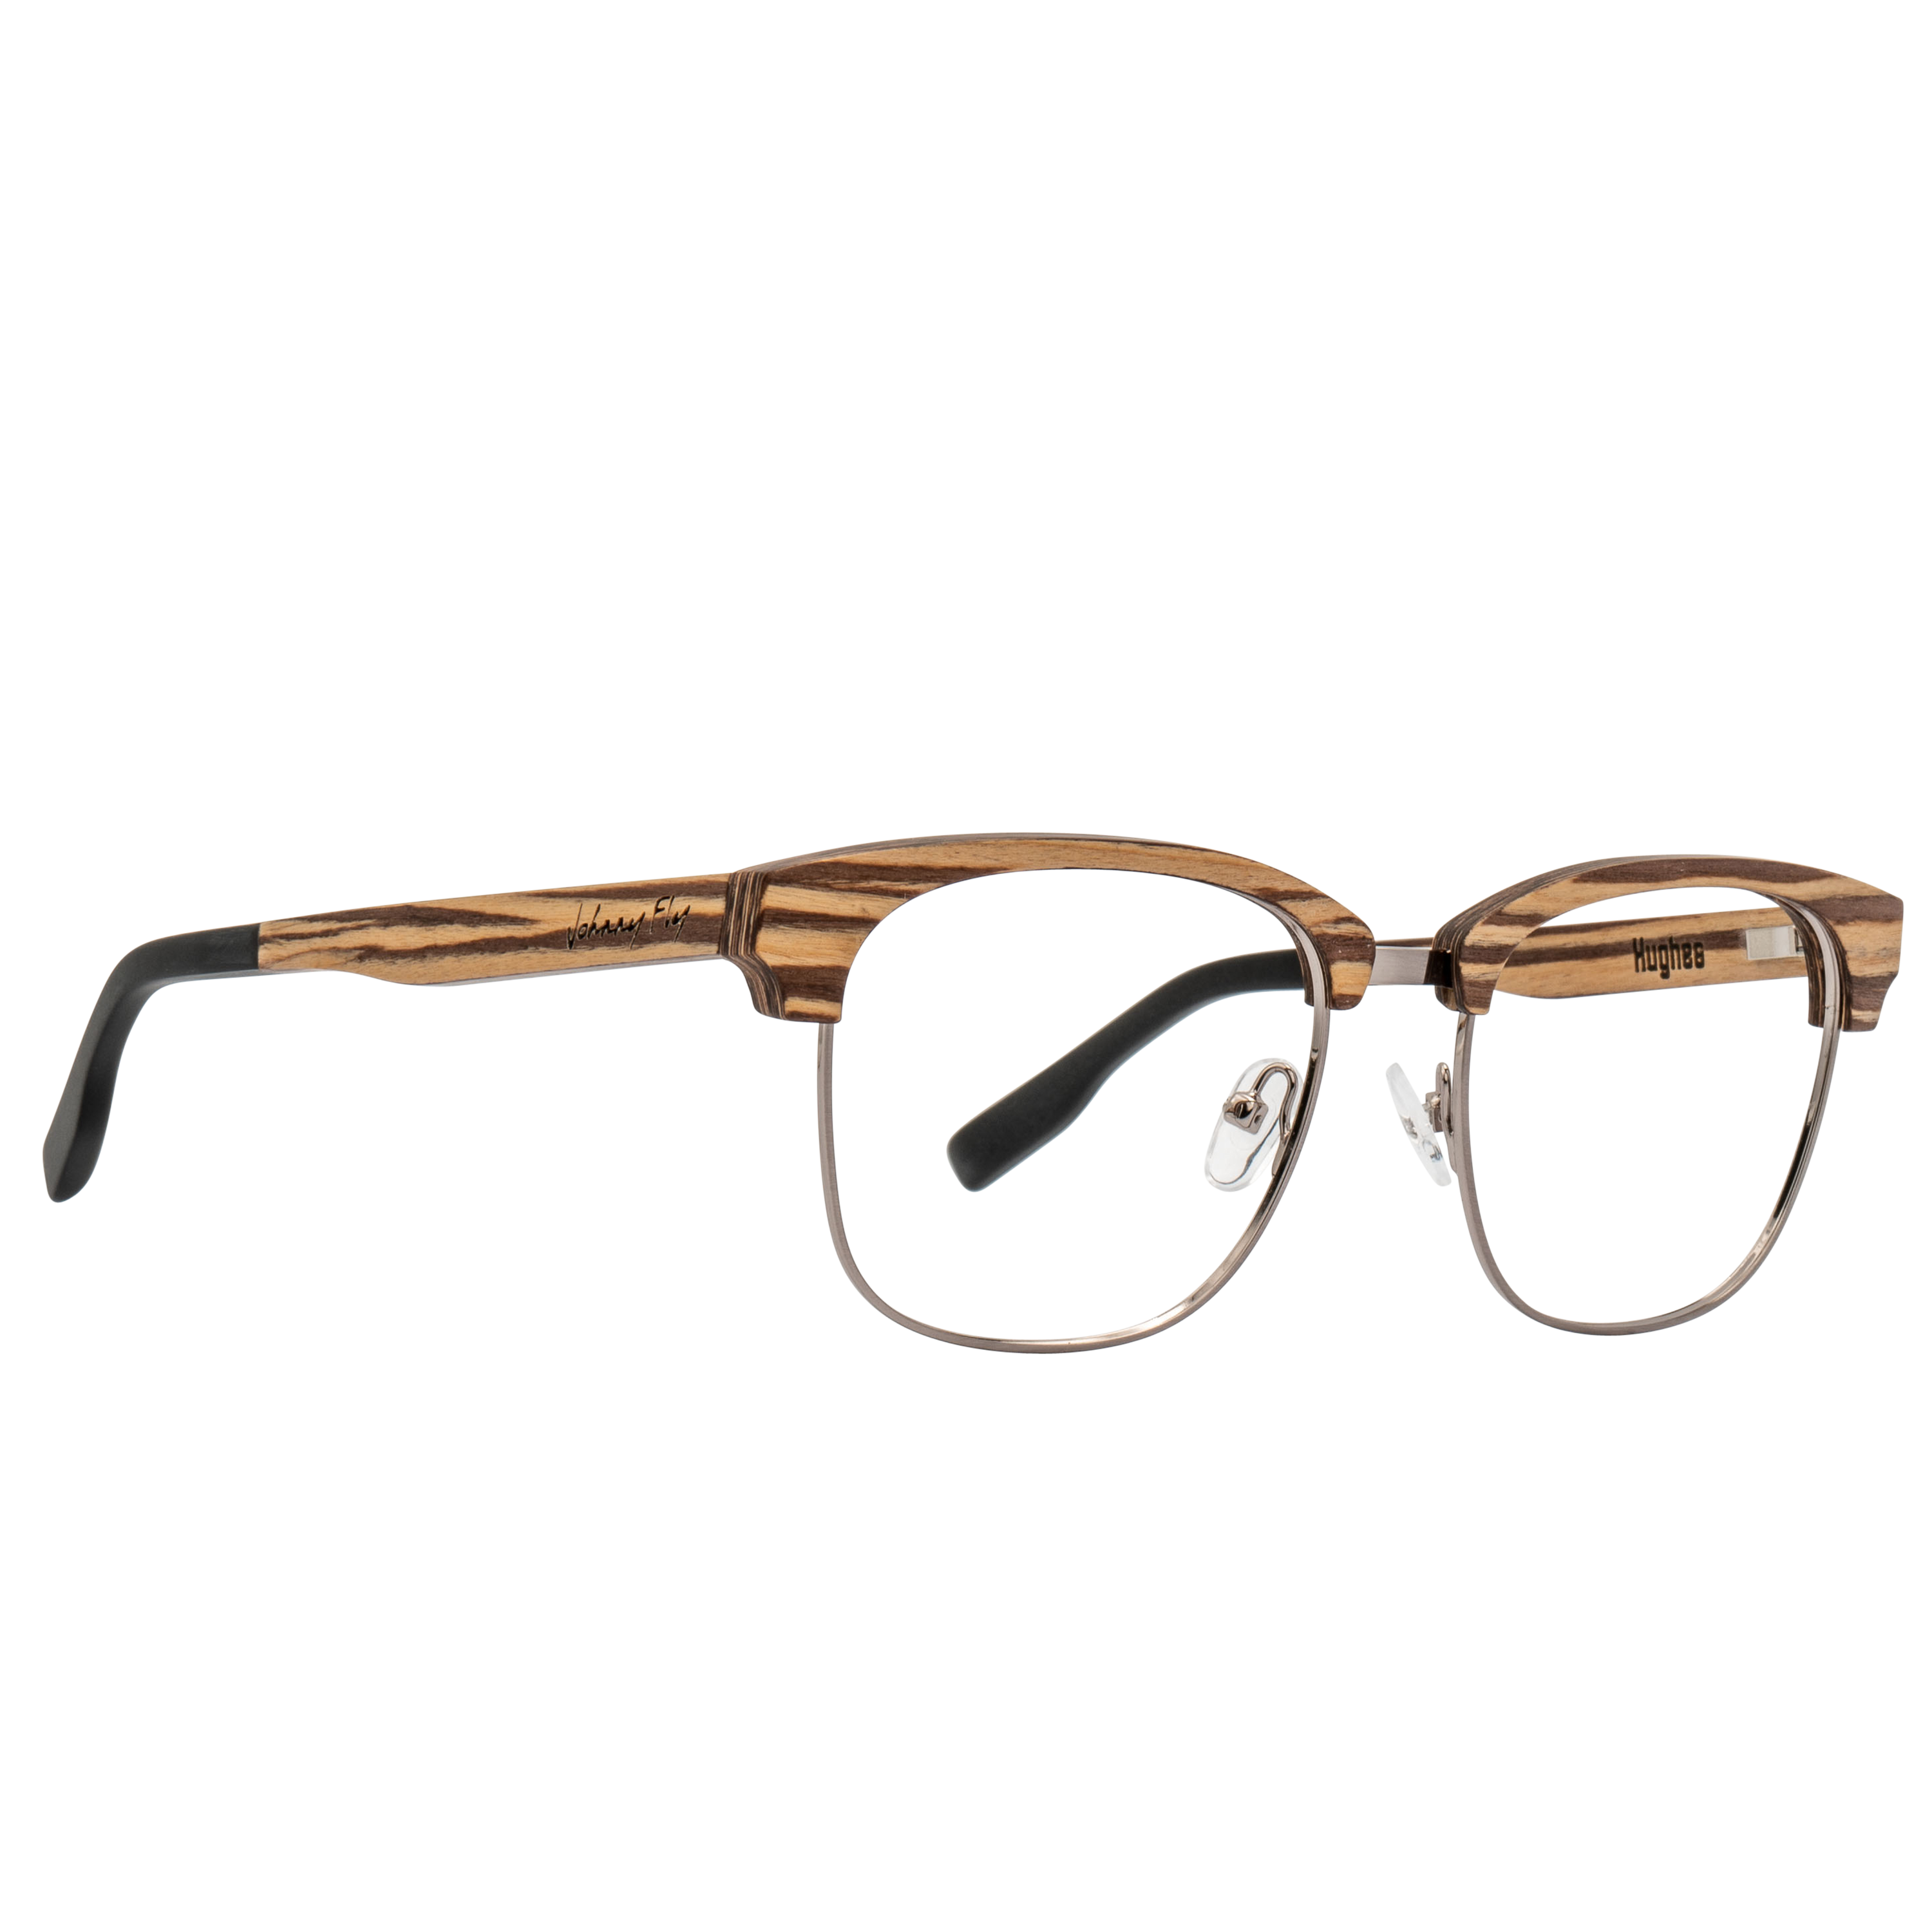 HUGHES Frame - Polished Nickel - Eyeglasses Frame - Johnny Fly Eyewear | 